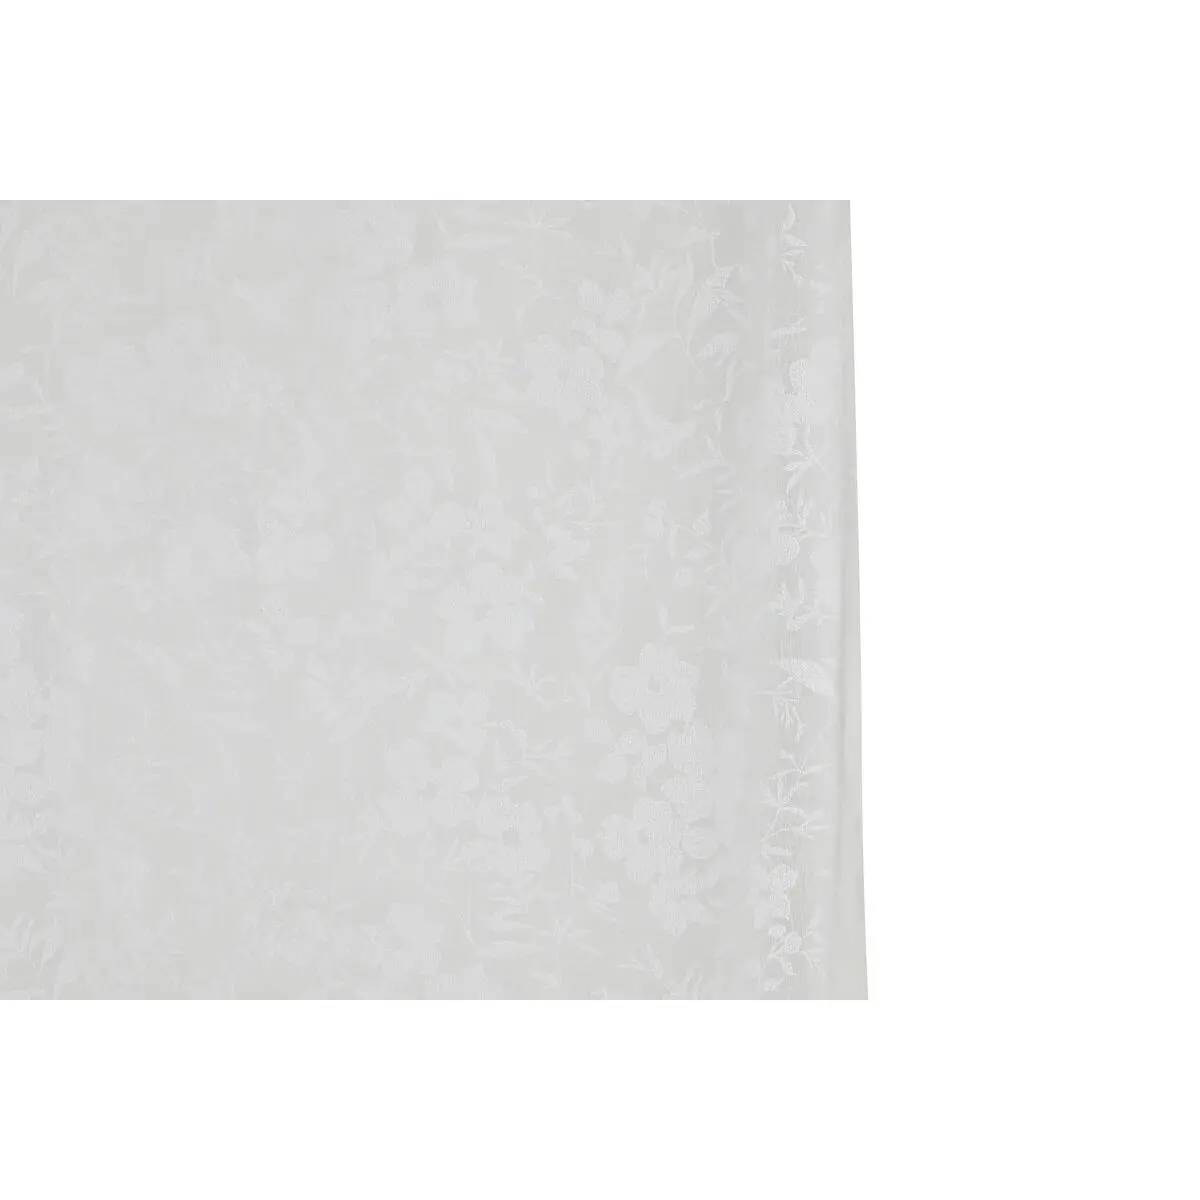 Tenda Home ESPRIT Bianco Romantico 140 x 260 cm